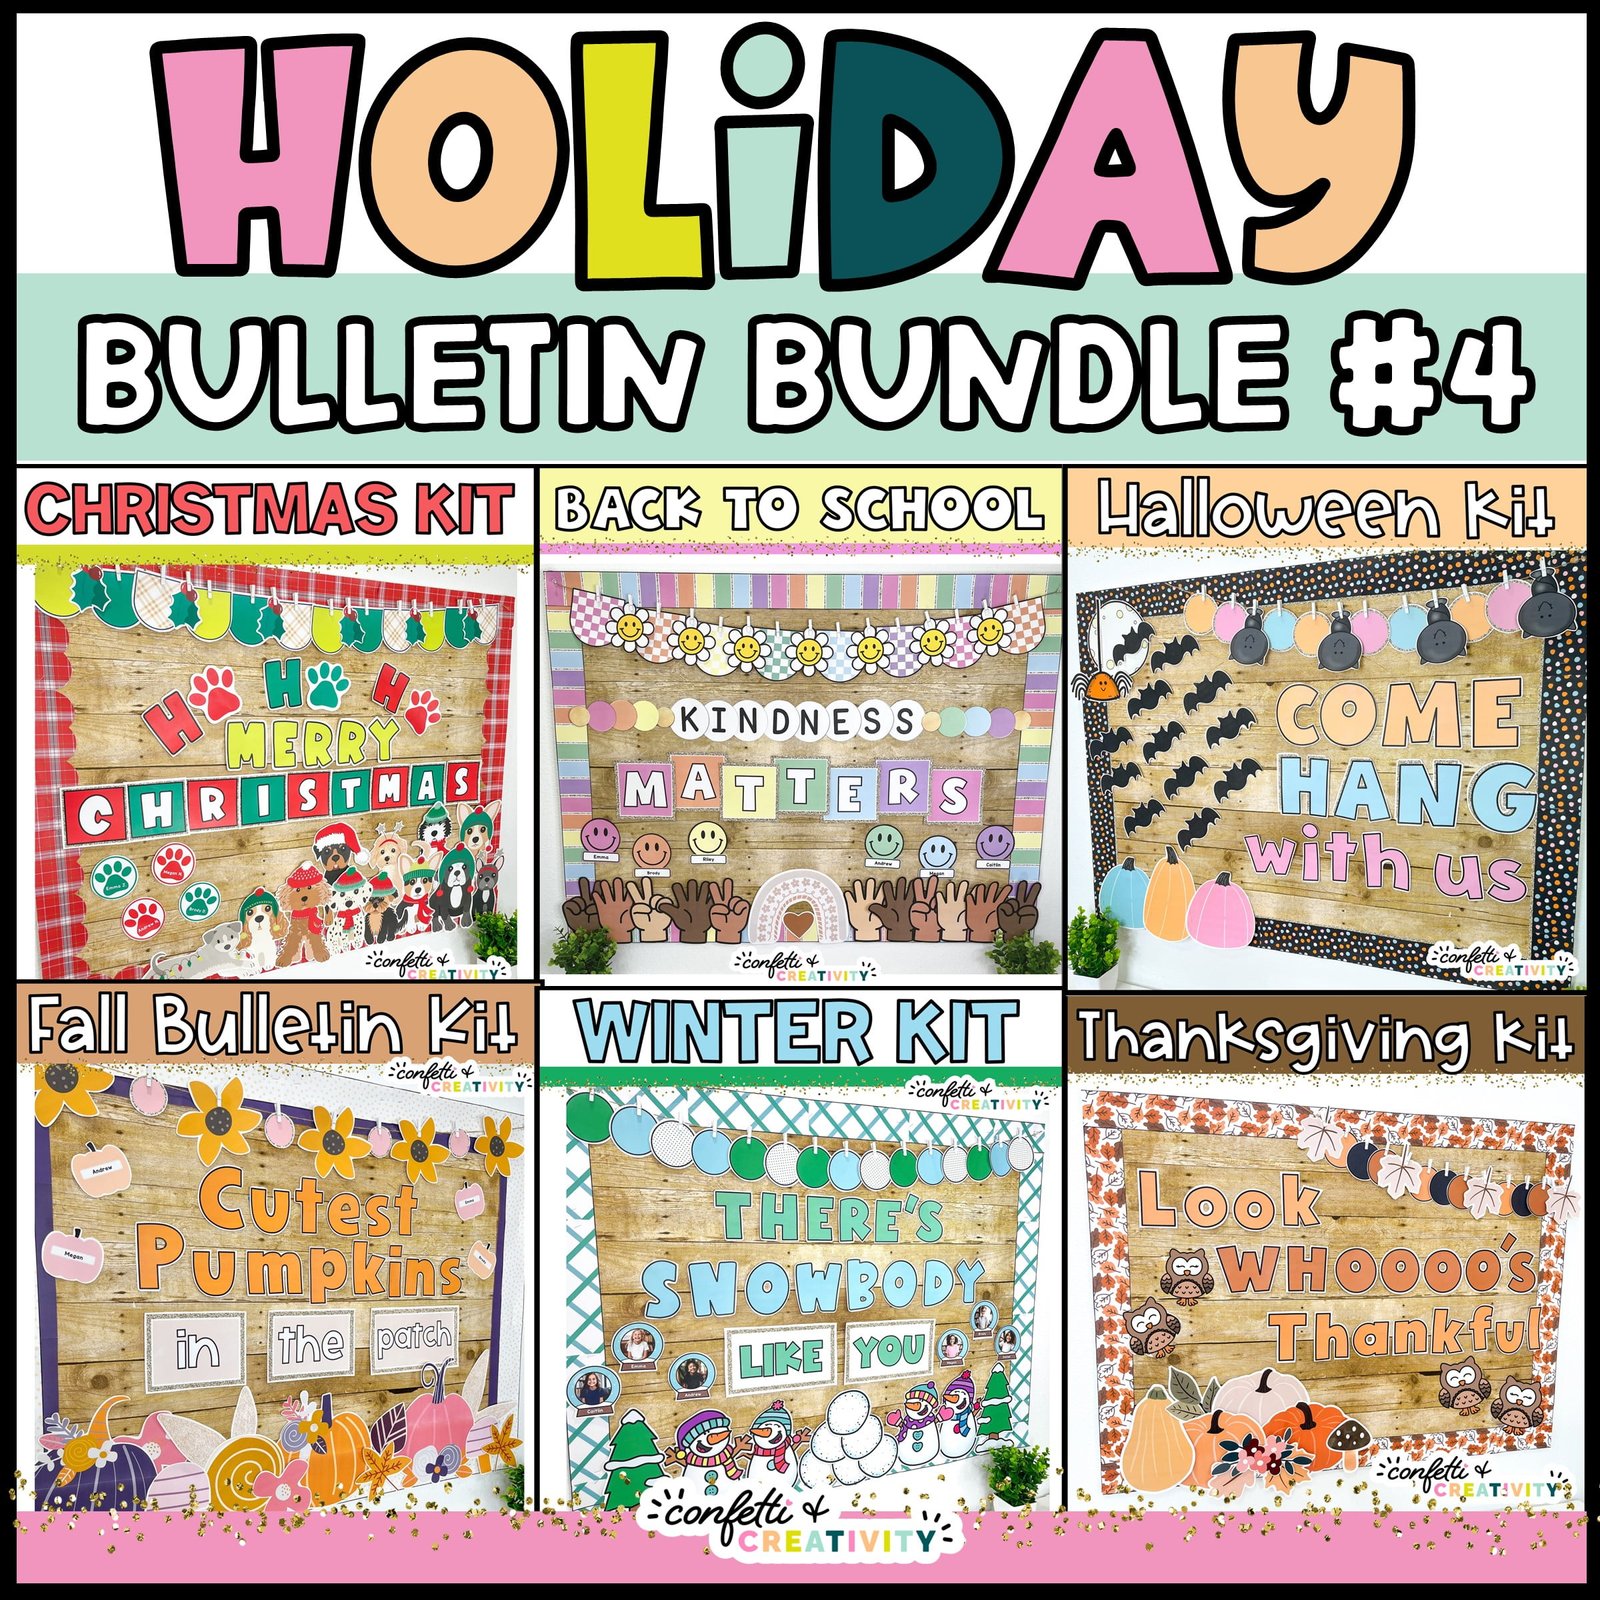 Holiday Bulletin Board GROWING Bundle #4